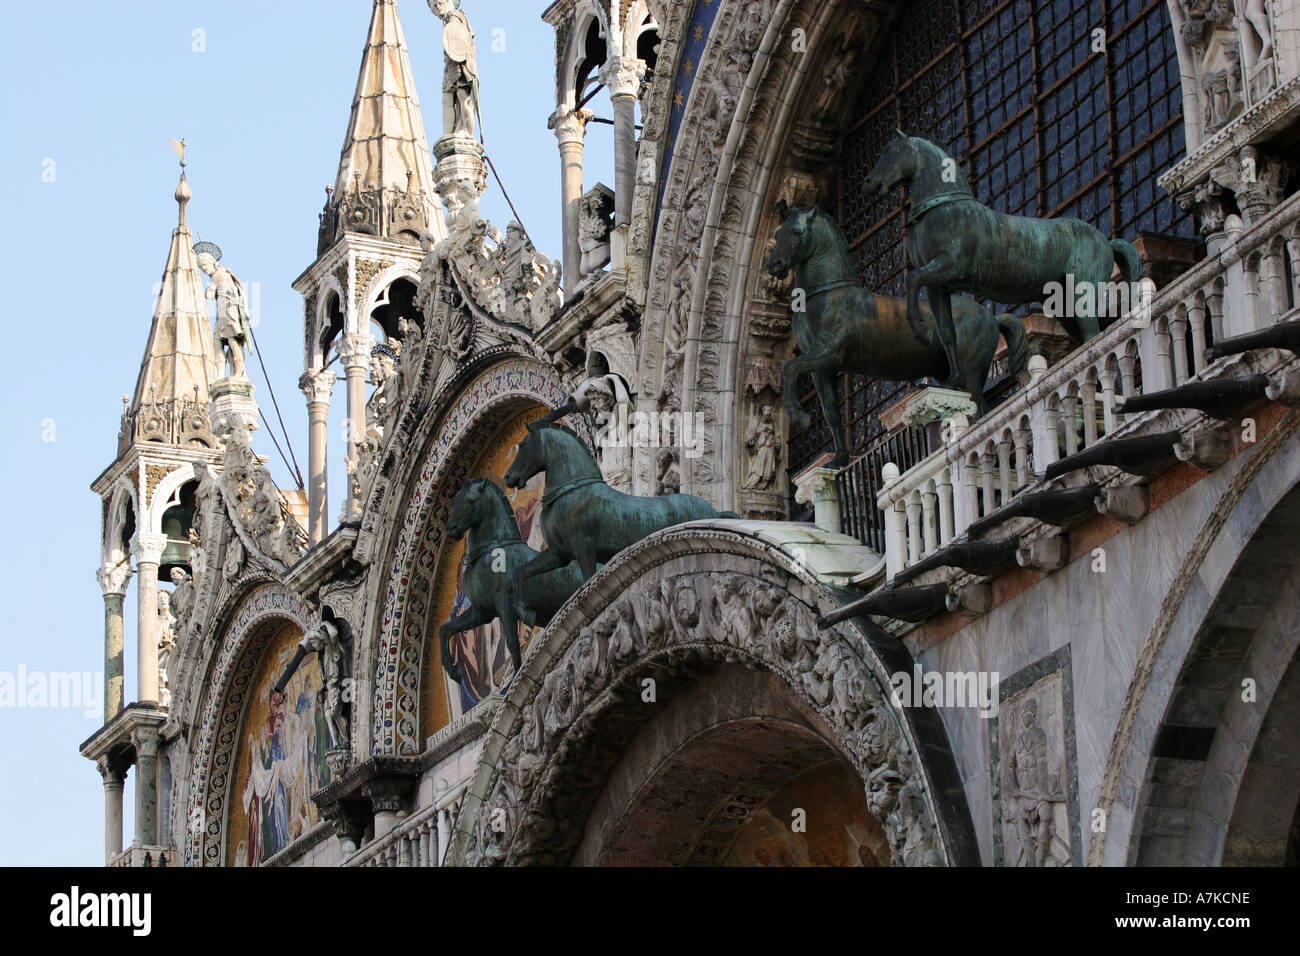 Closeup detail of bronze horses on the balcony of Saint St Marks Basillica in St Marks square Venice Italy European destination Stock Photo